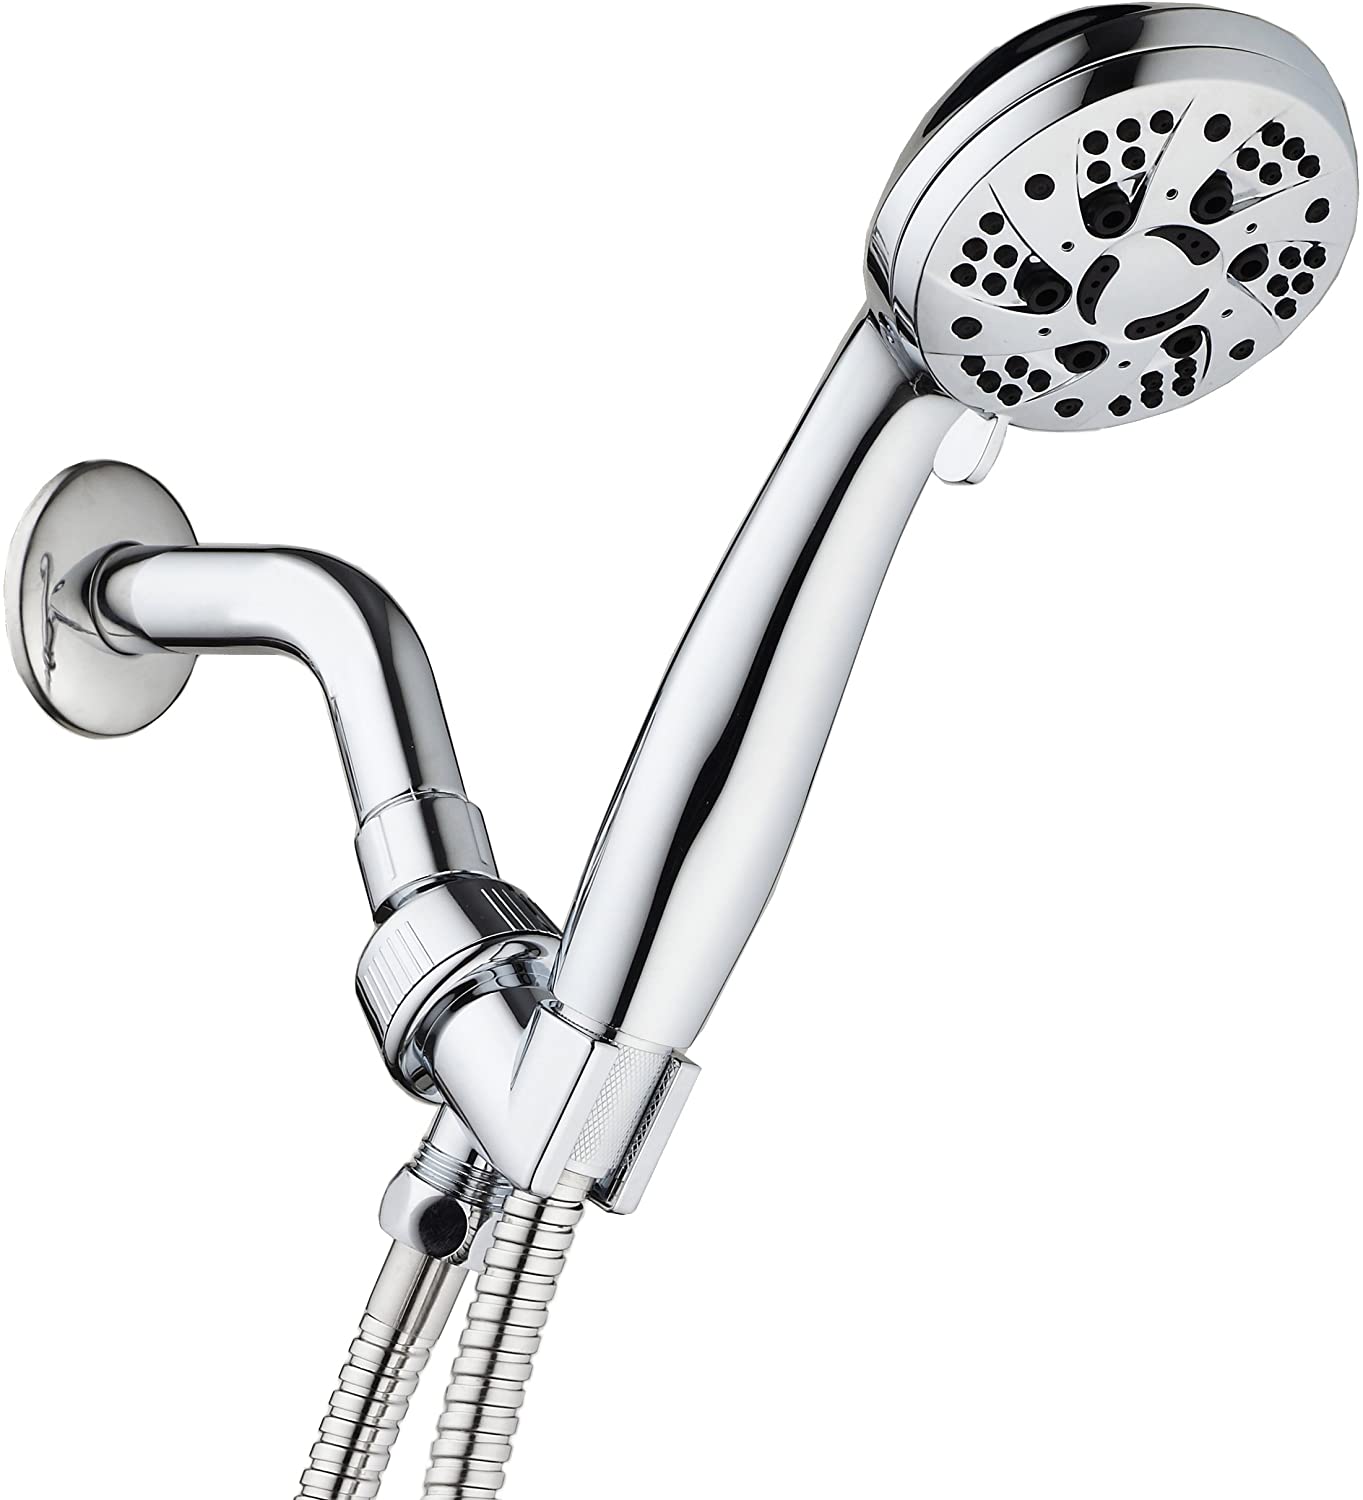 AquaDance Handheld Shower